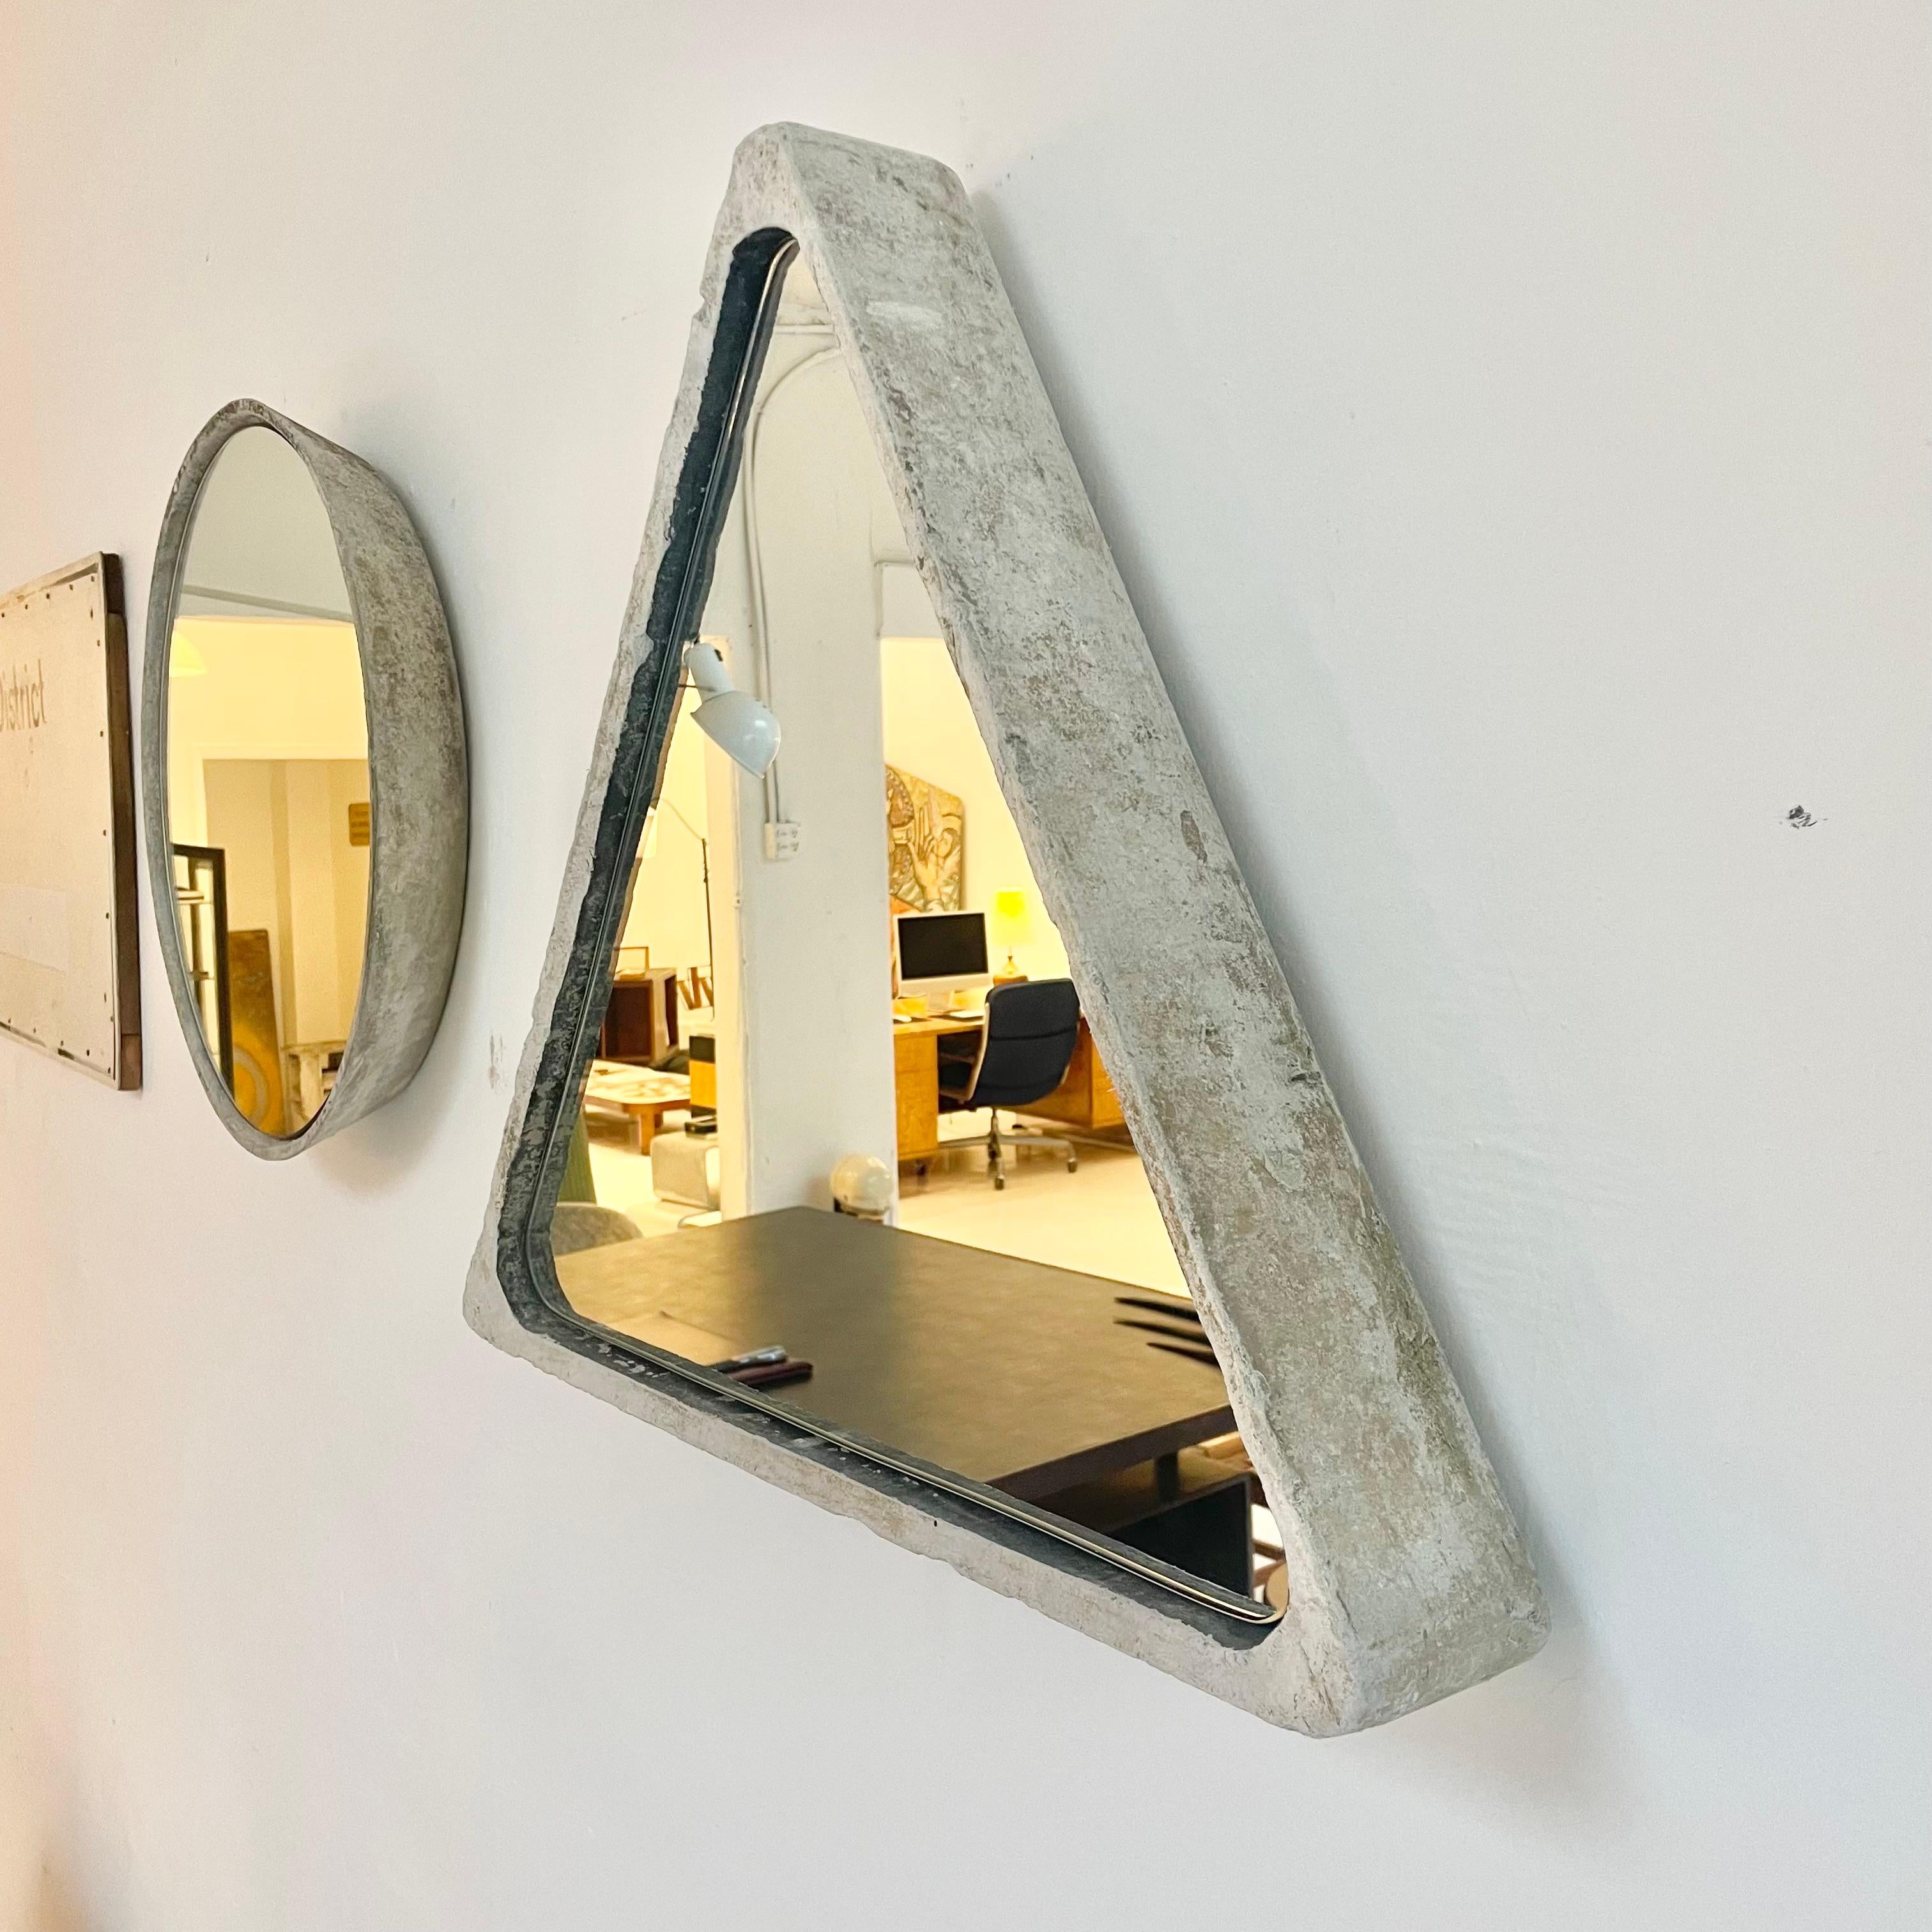 Swiss Triangular Willy Guhl Concrete Mirror, 1960s Switzerland